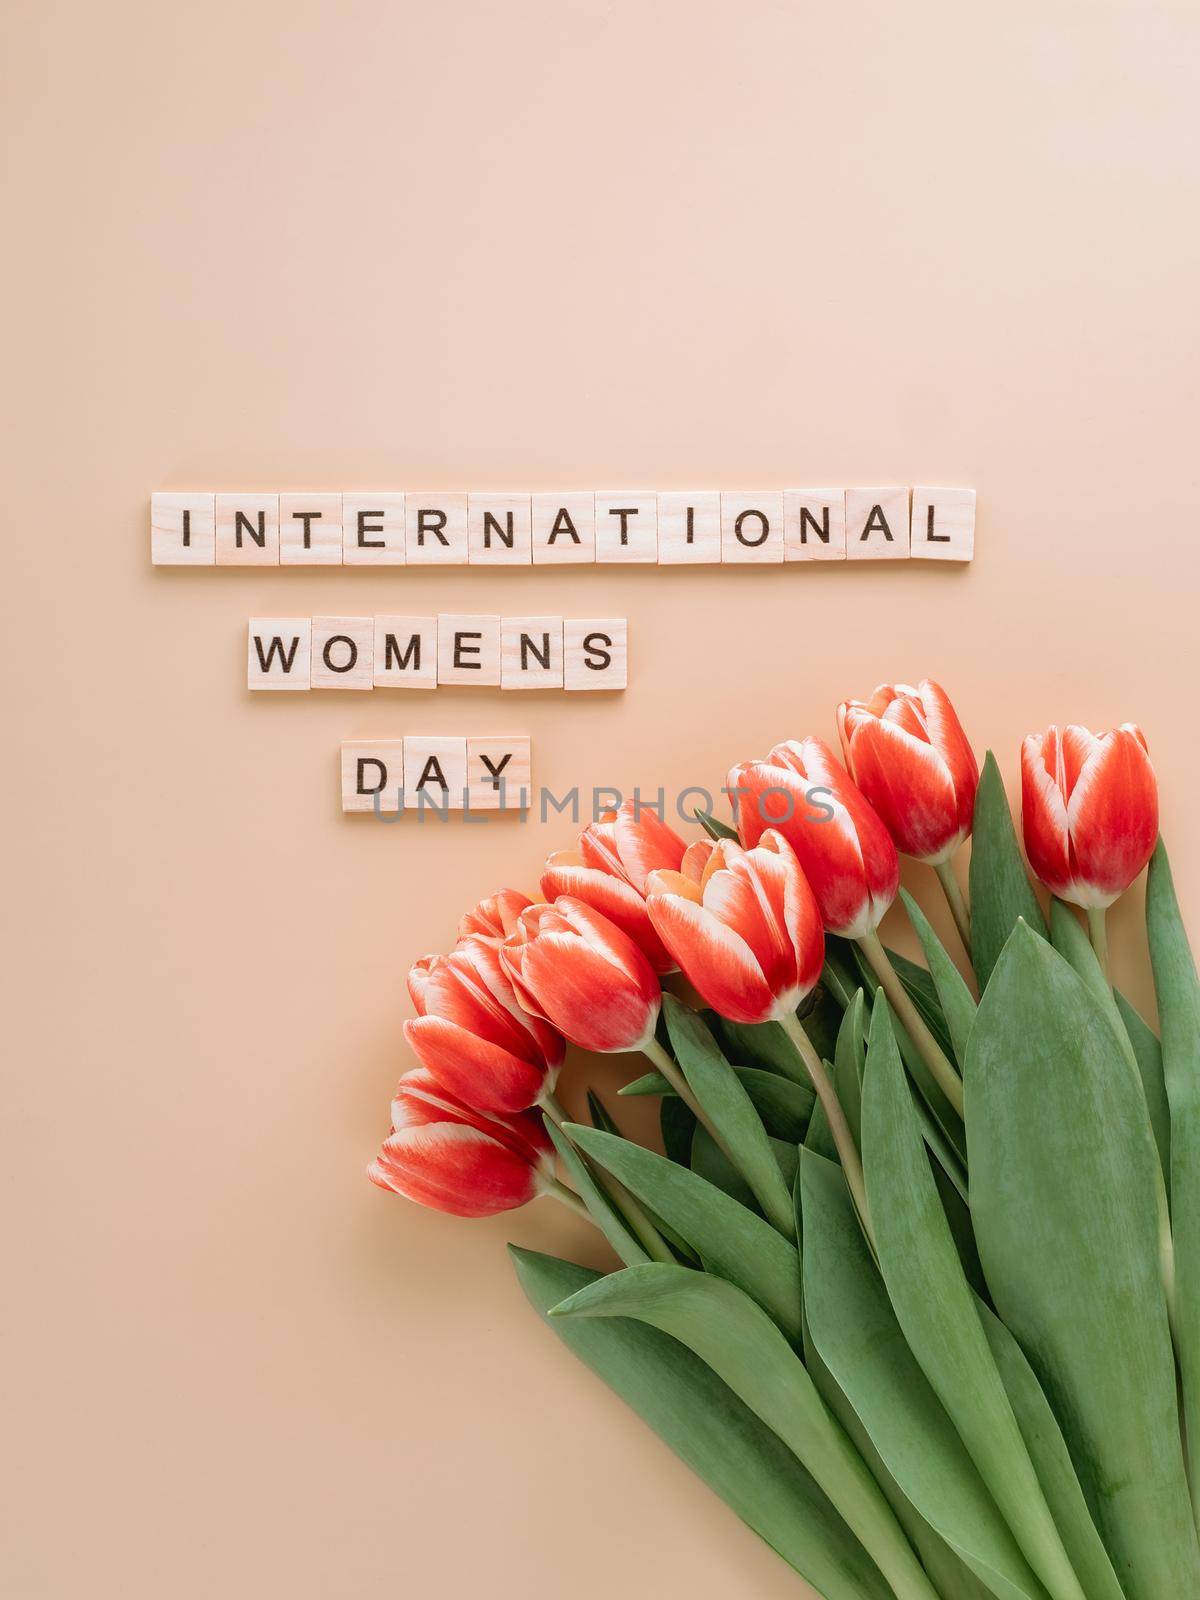 International women's day, champagne background by fascinadora